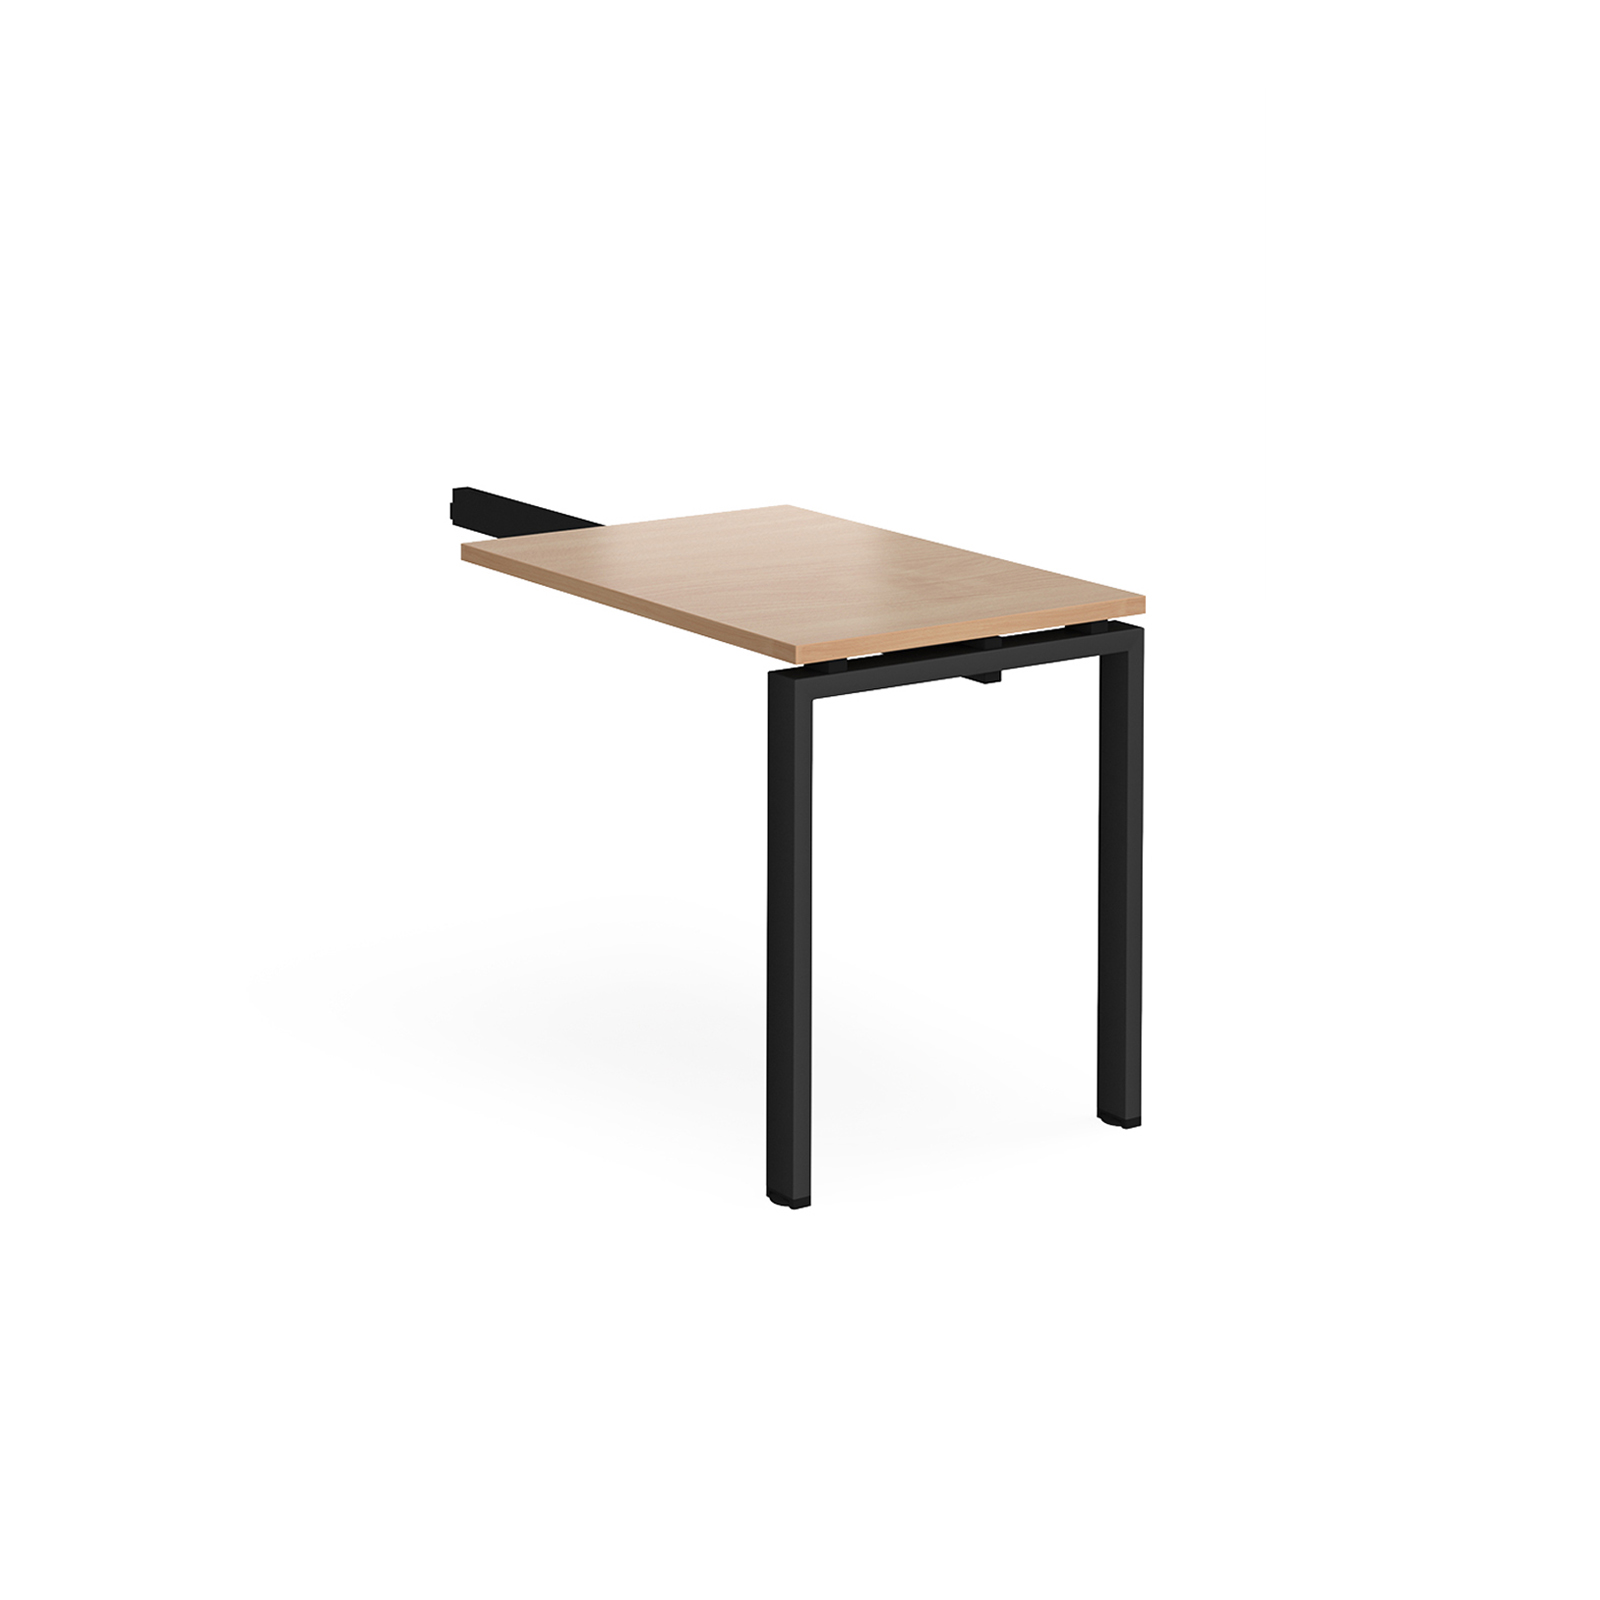 Adapt add on unit single return desk 800mm x 600mm - black frame, oak top